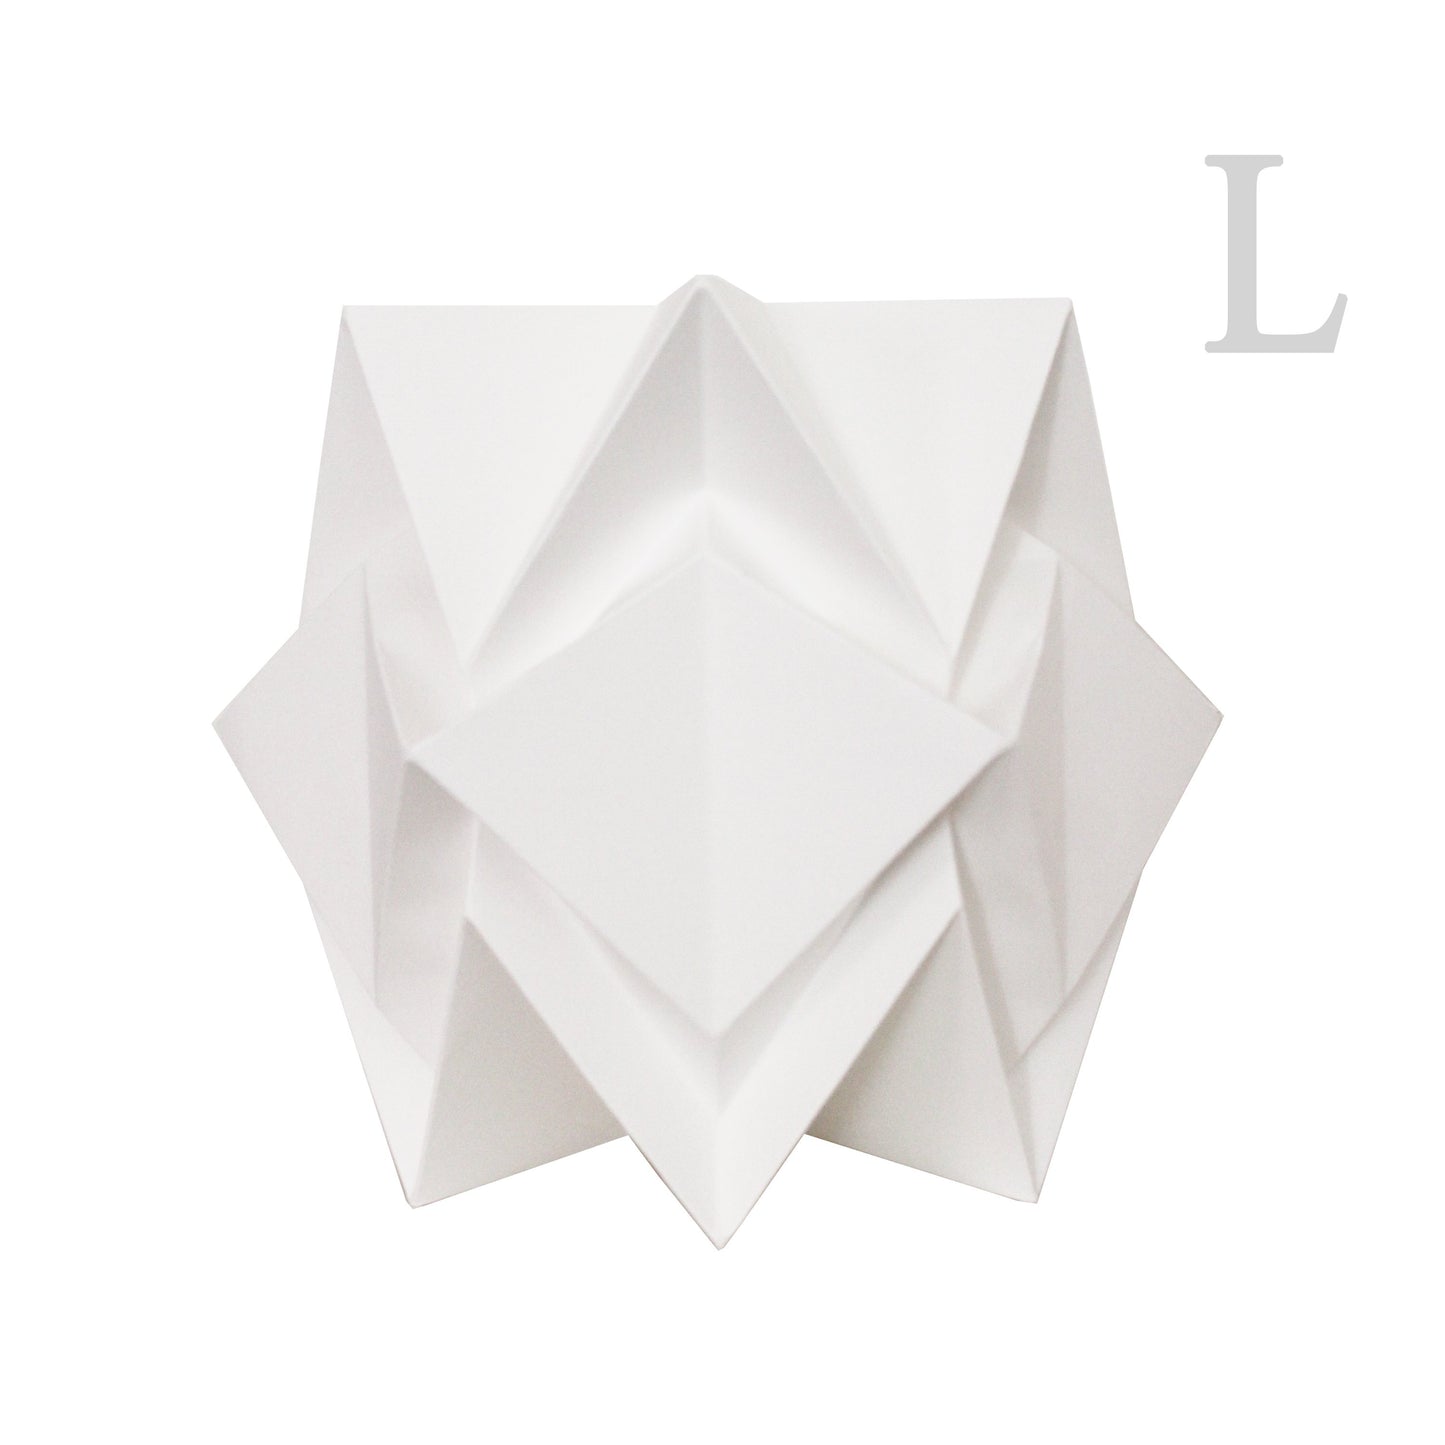 Origami Floor Lamp in Paper - Size L